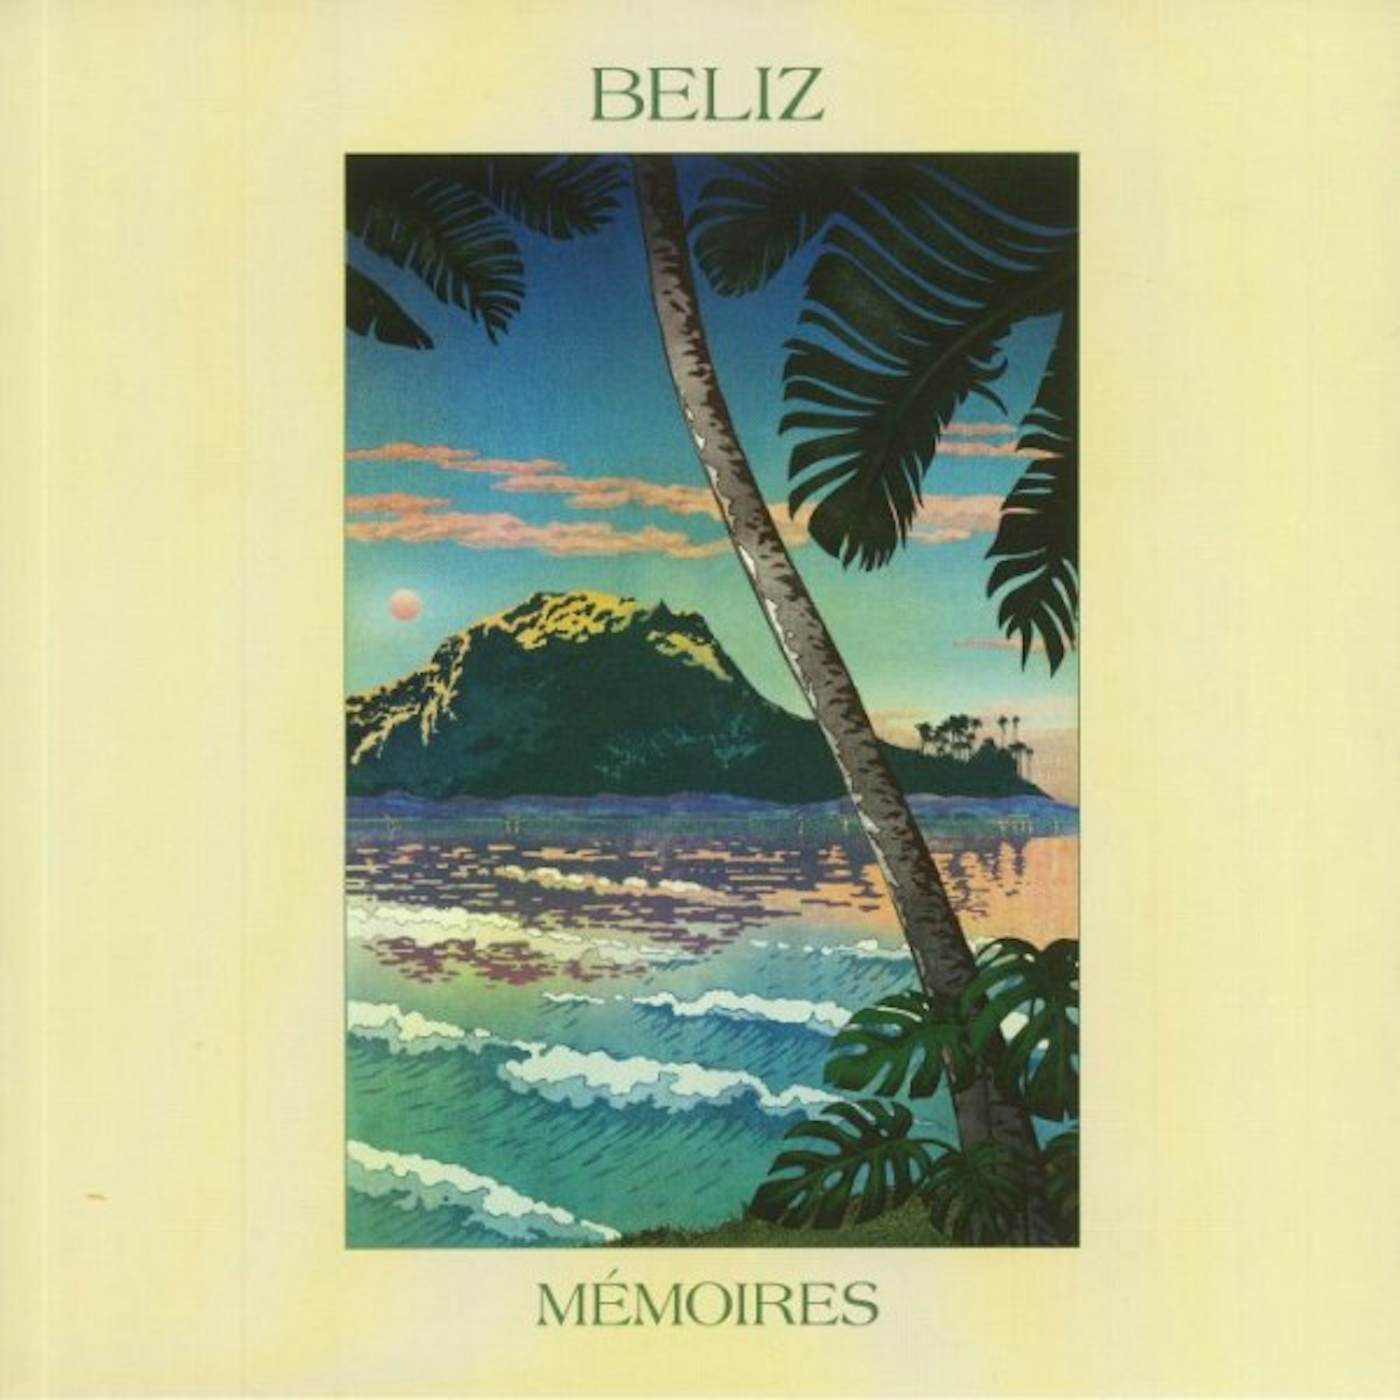 Belize MEMOIRES Vinyl Record